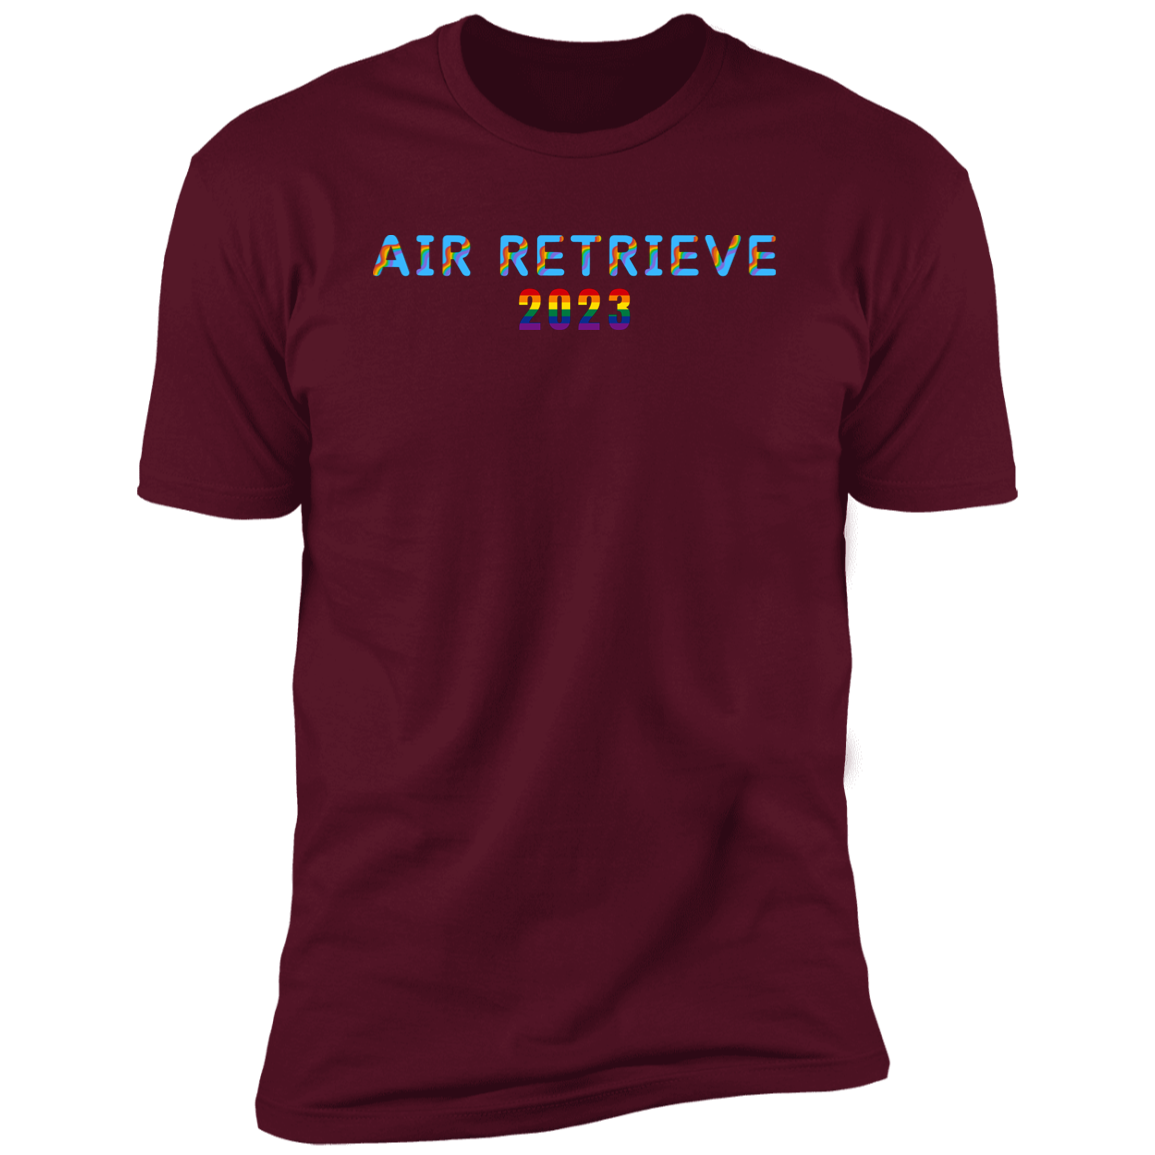 Air Retrieve 2023 Pride Dock diving t-shirt, dog pride air retrieve dock diving shirt for humans, in maroon